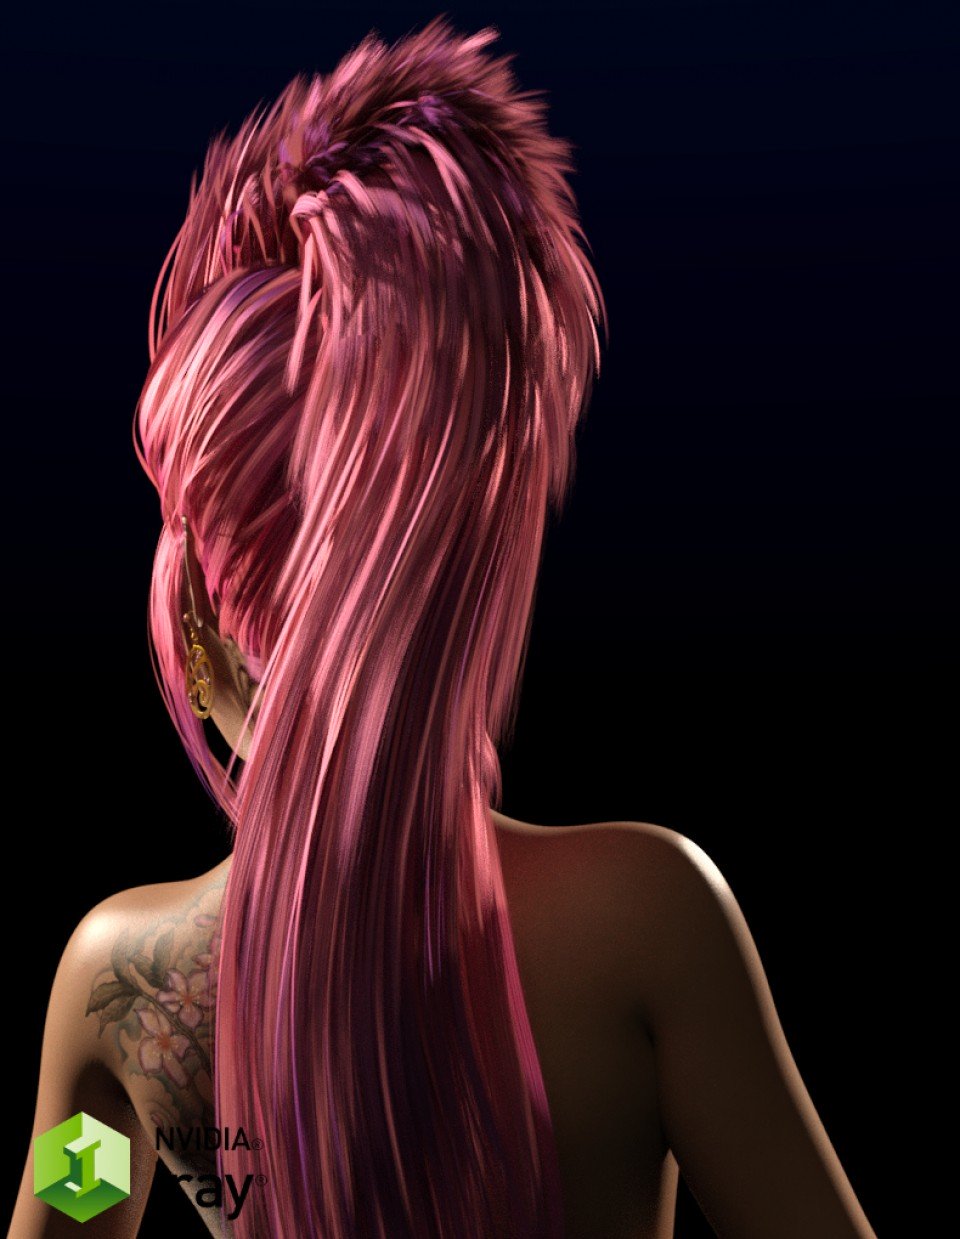 Iray 13 Shades of Pink for DAZ Studio_DAZ3D下载站